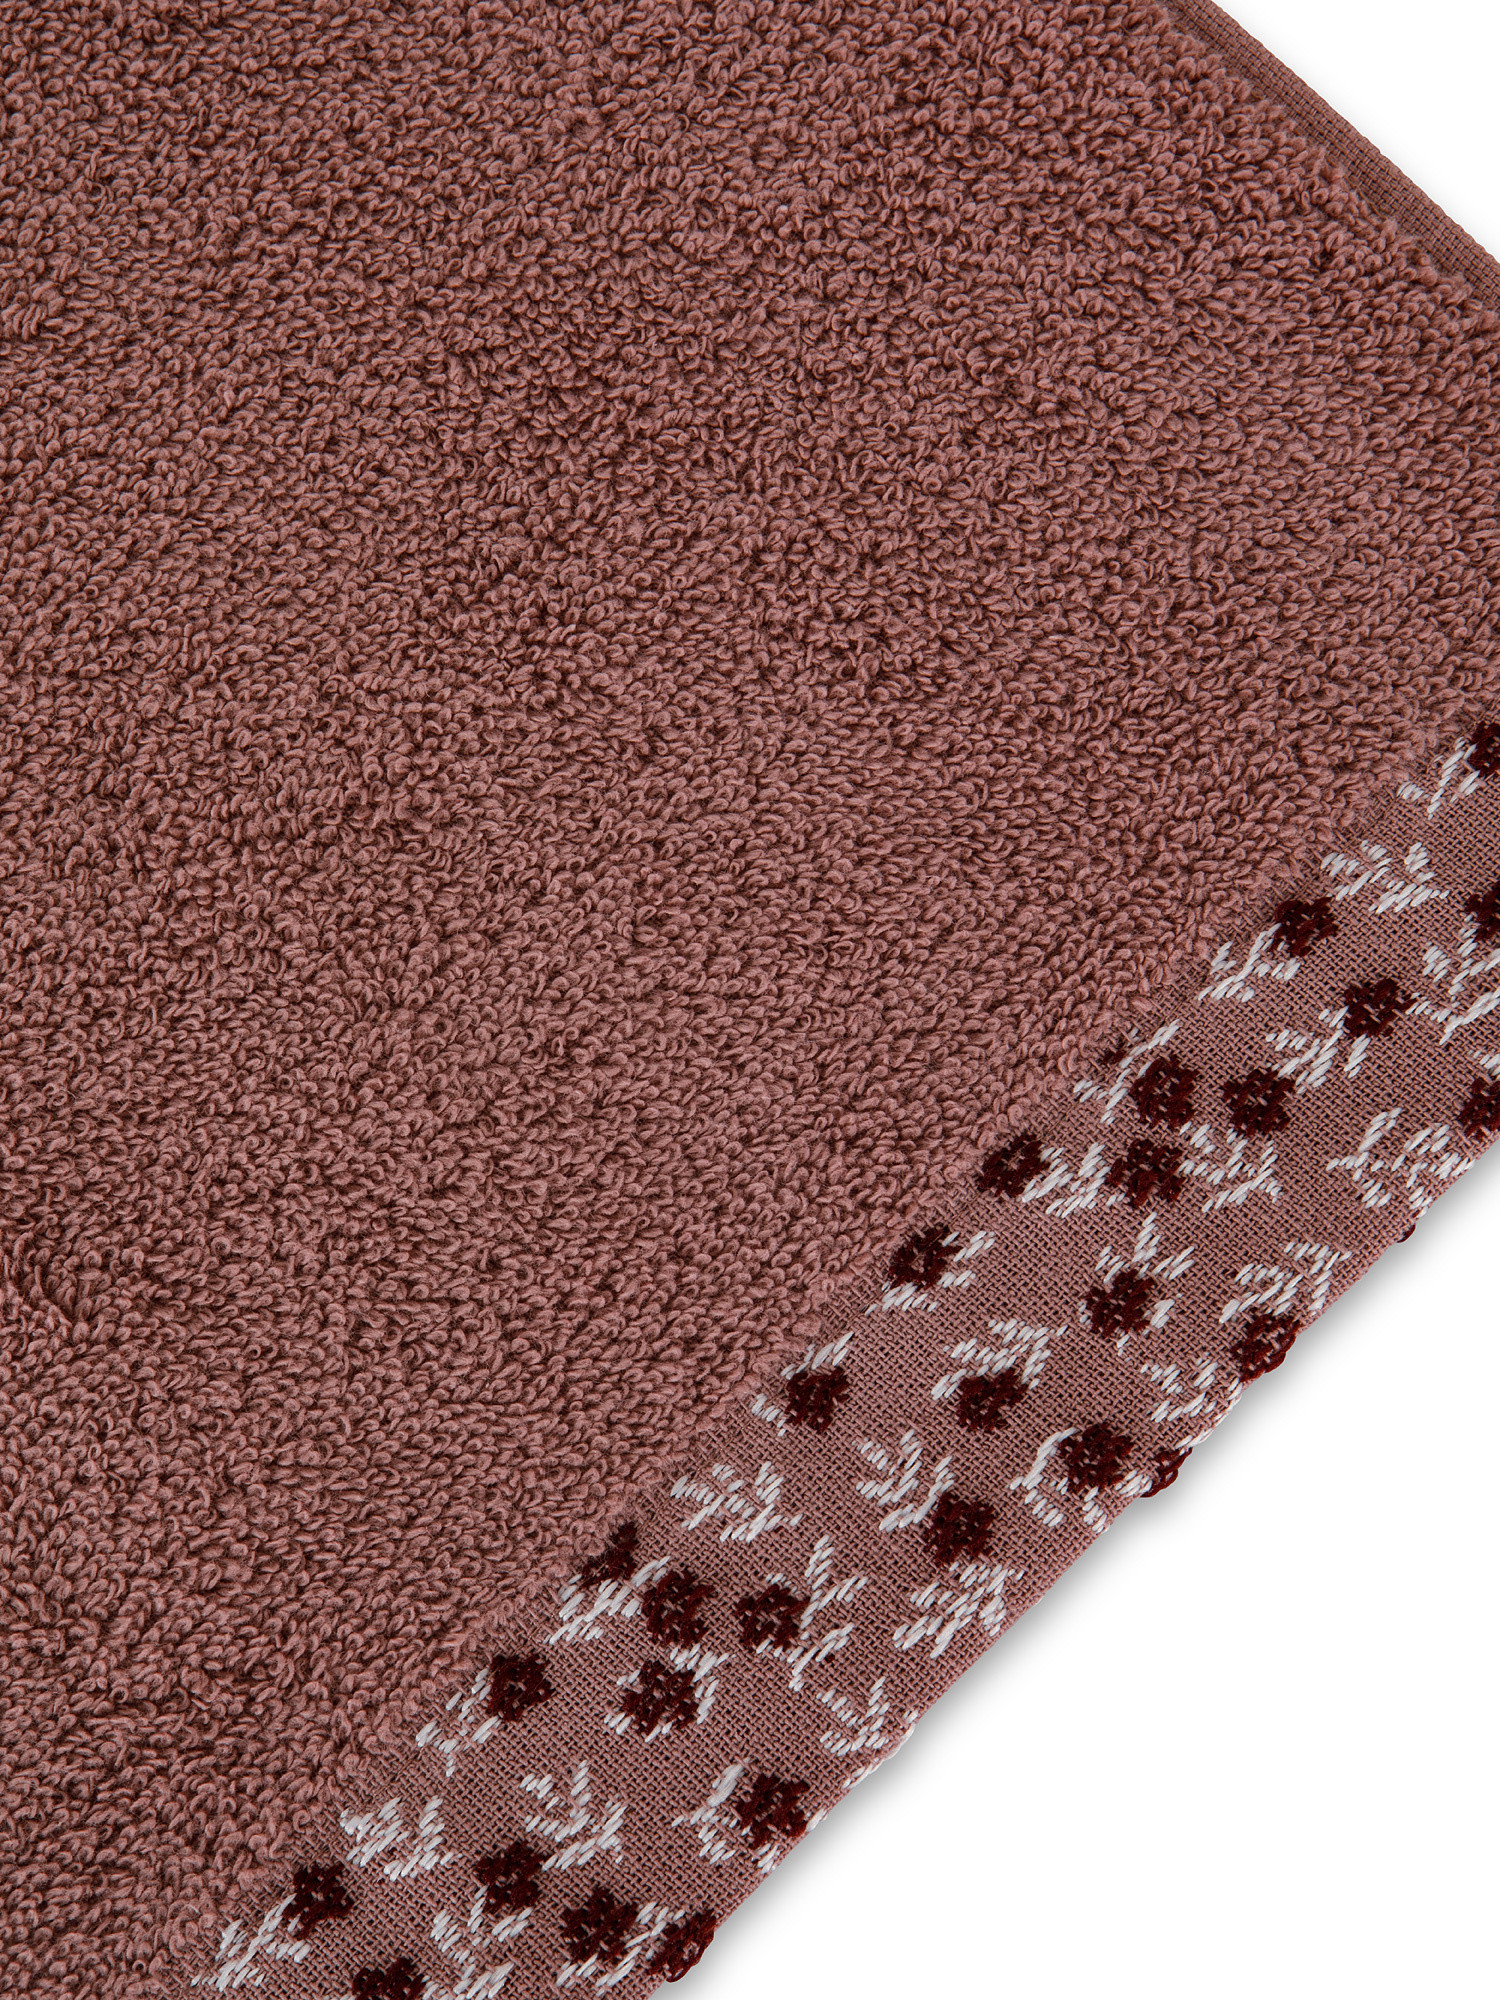 Asciugamano spugna di cotone bordo floreale, Rosa scuro, large image number 2